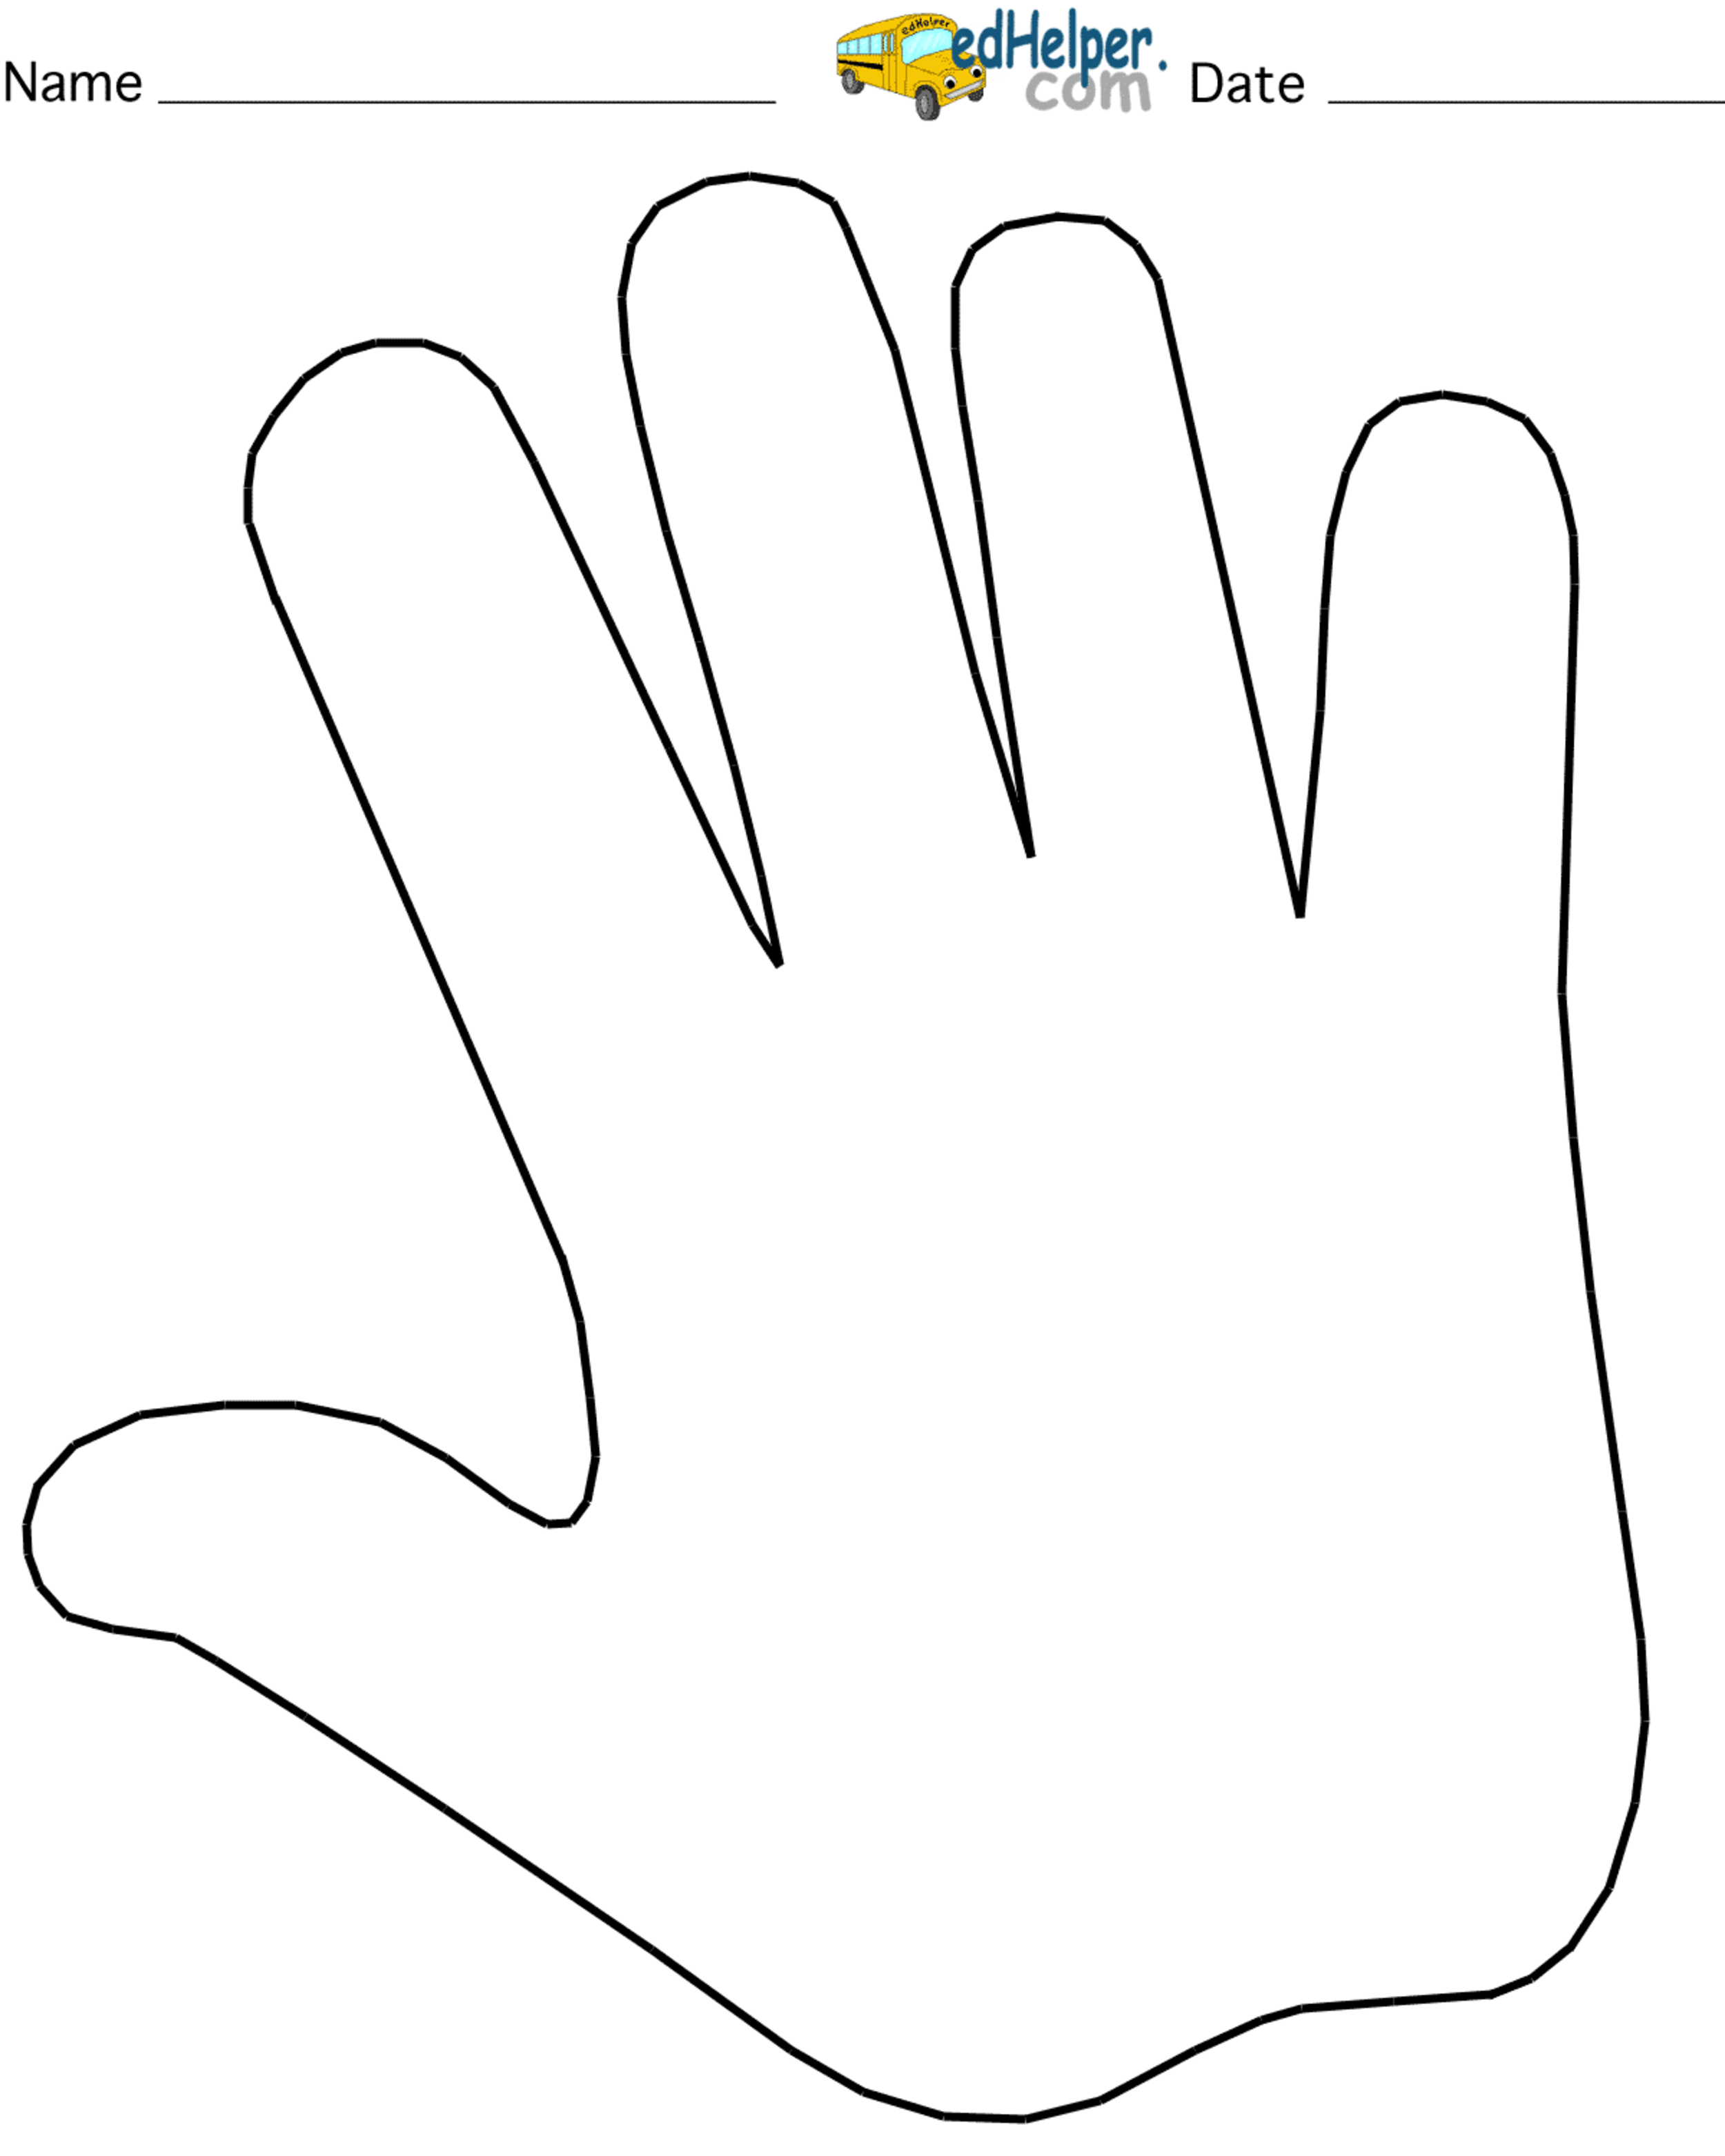 Handprint clipart hand template. Outline hands 